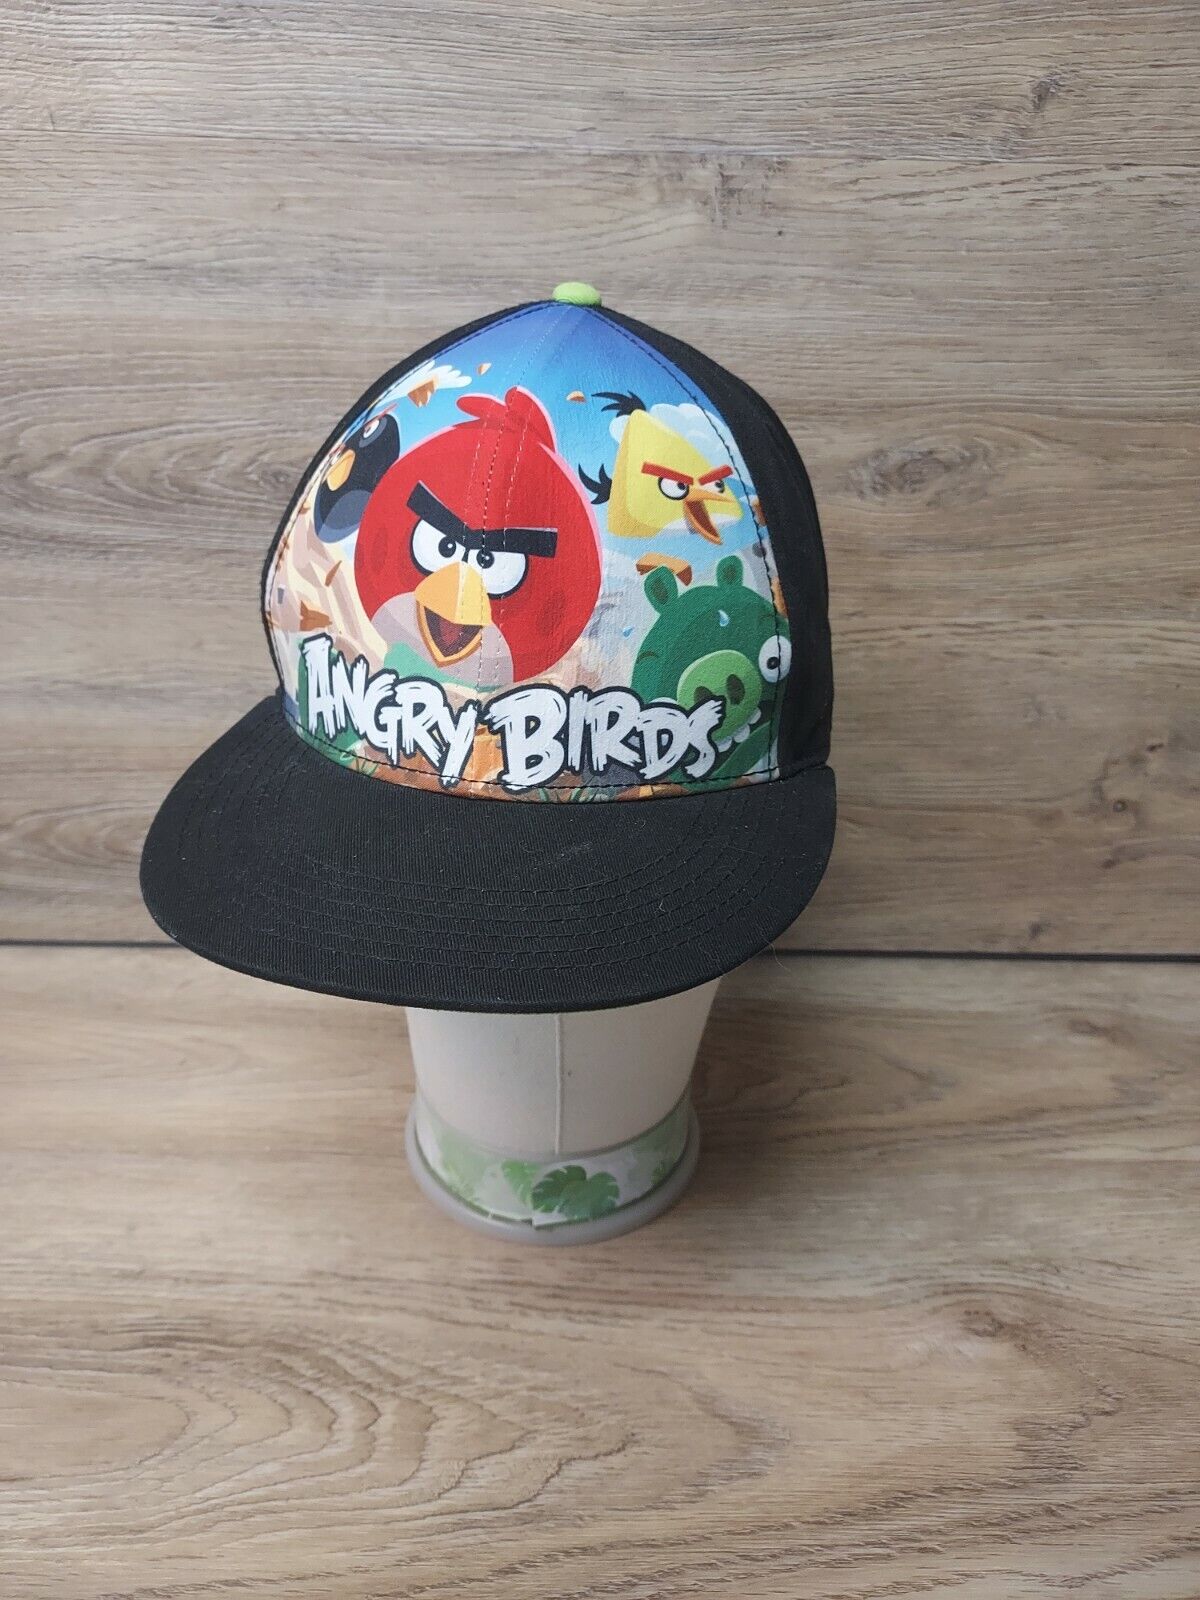 Angry Birds Group Crew Shot Cartoon Video Game Snapback Hat Cap | eBay